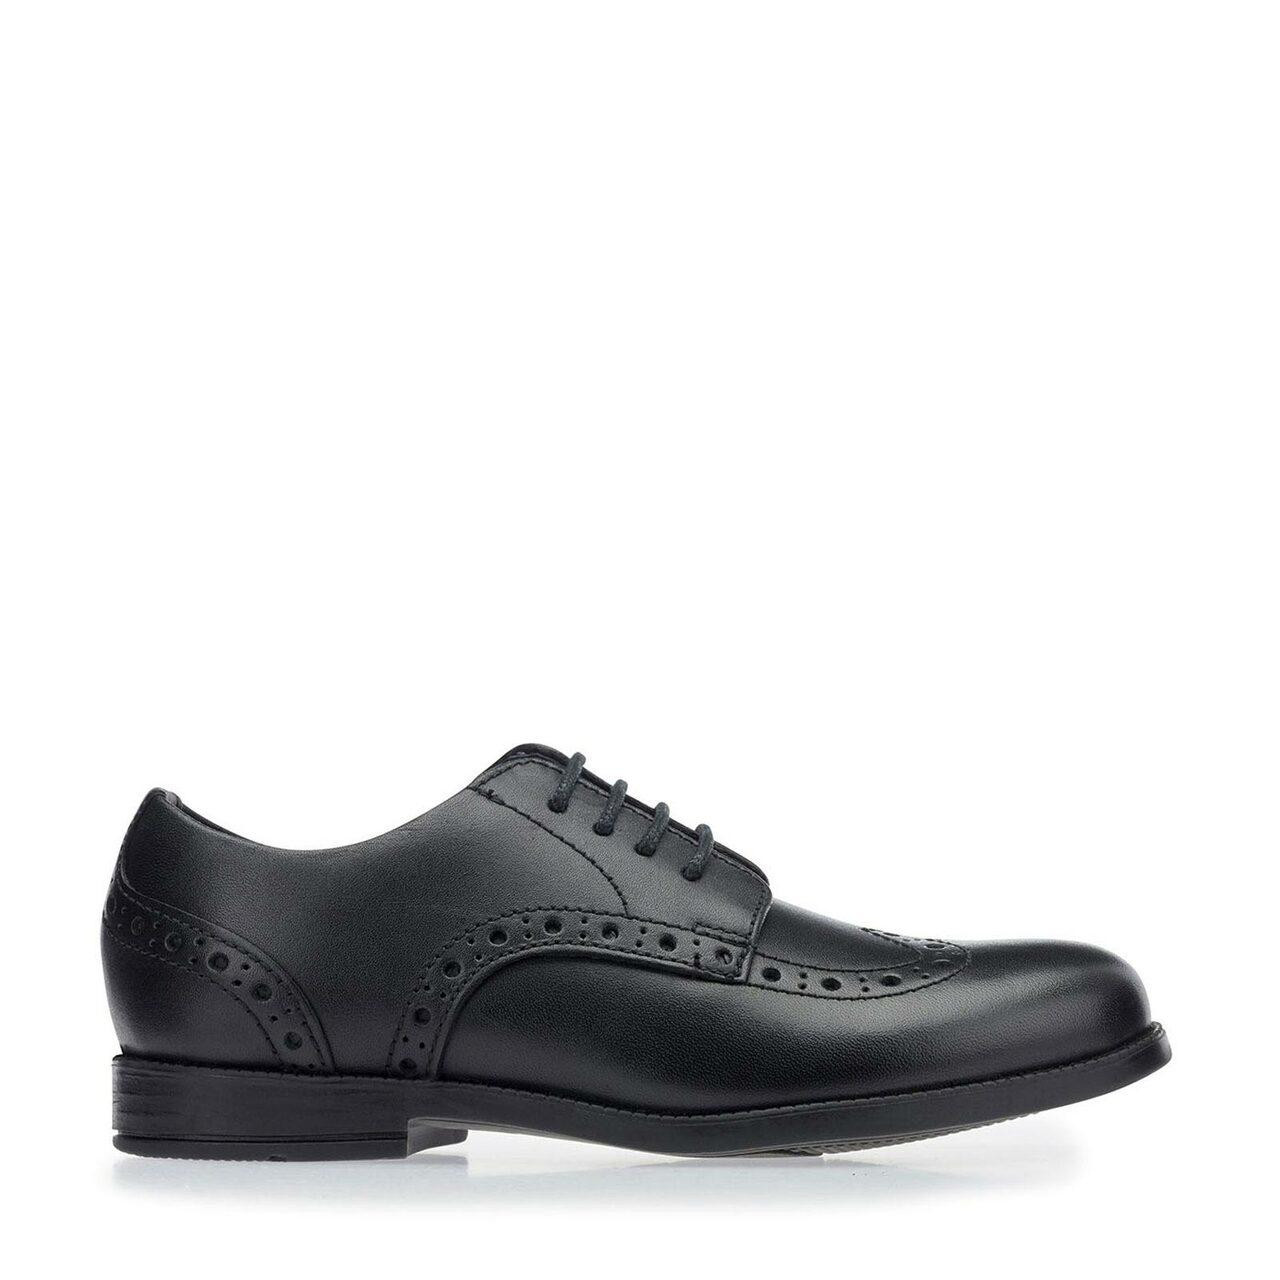 Brogue Pri, Black leather lace-up school shoes - Start-Rite